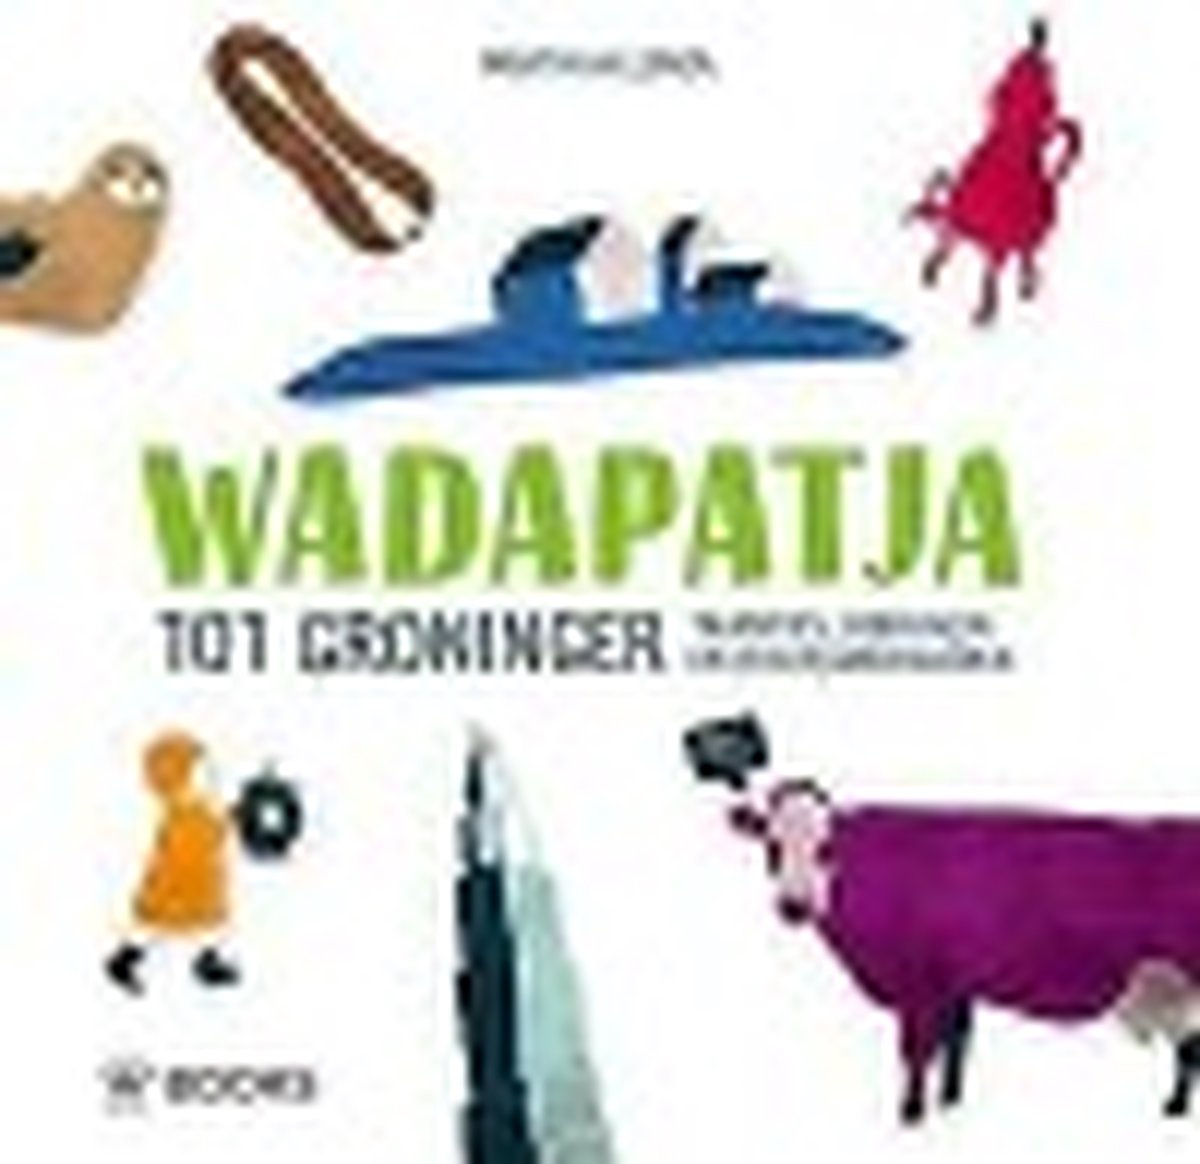 Uitgeverij Wbooks Wadapatja